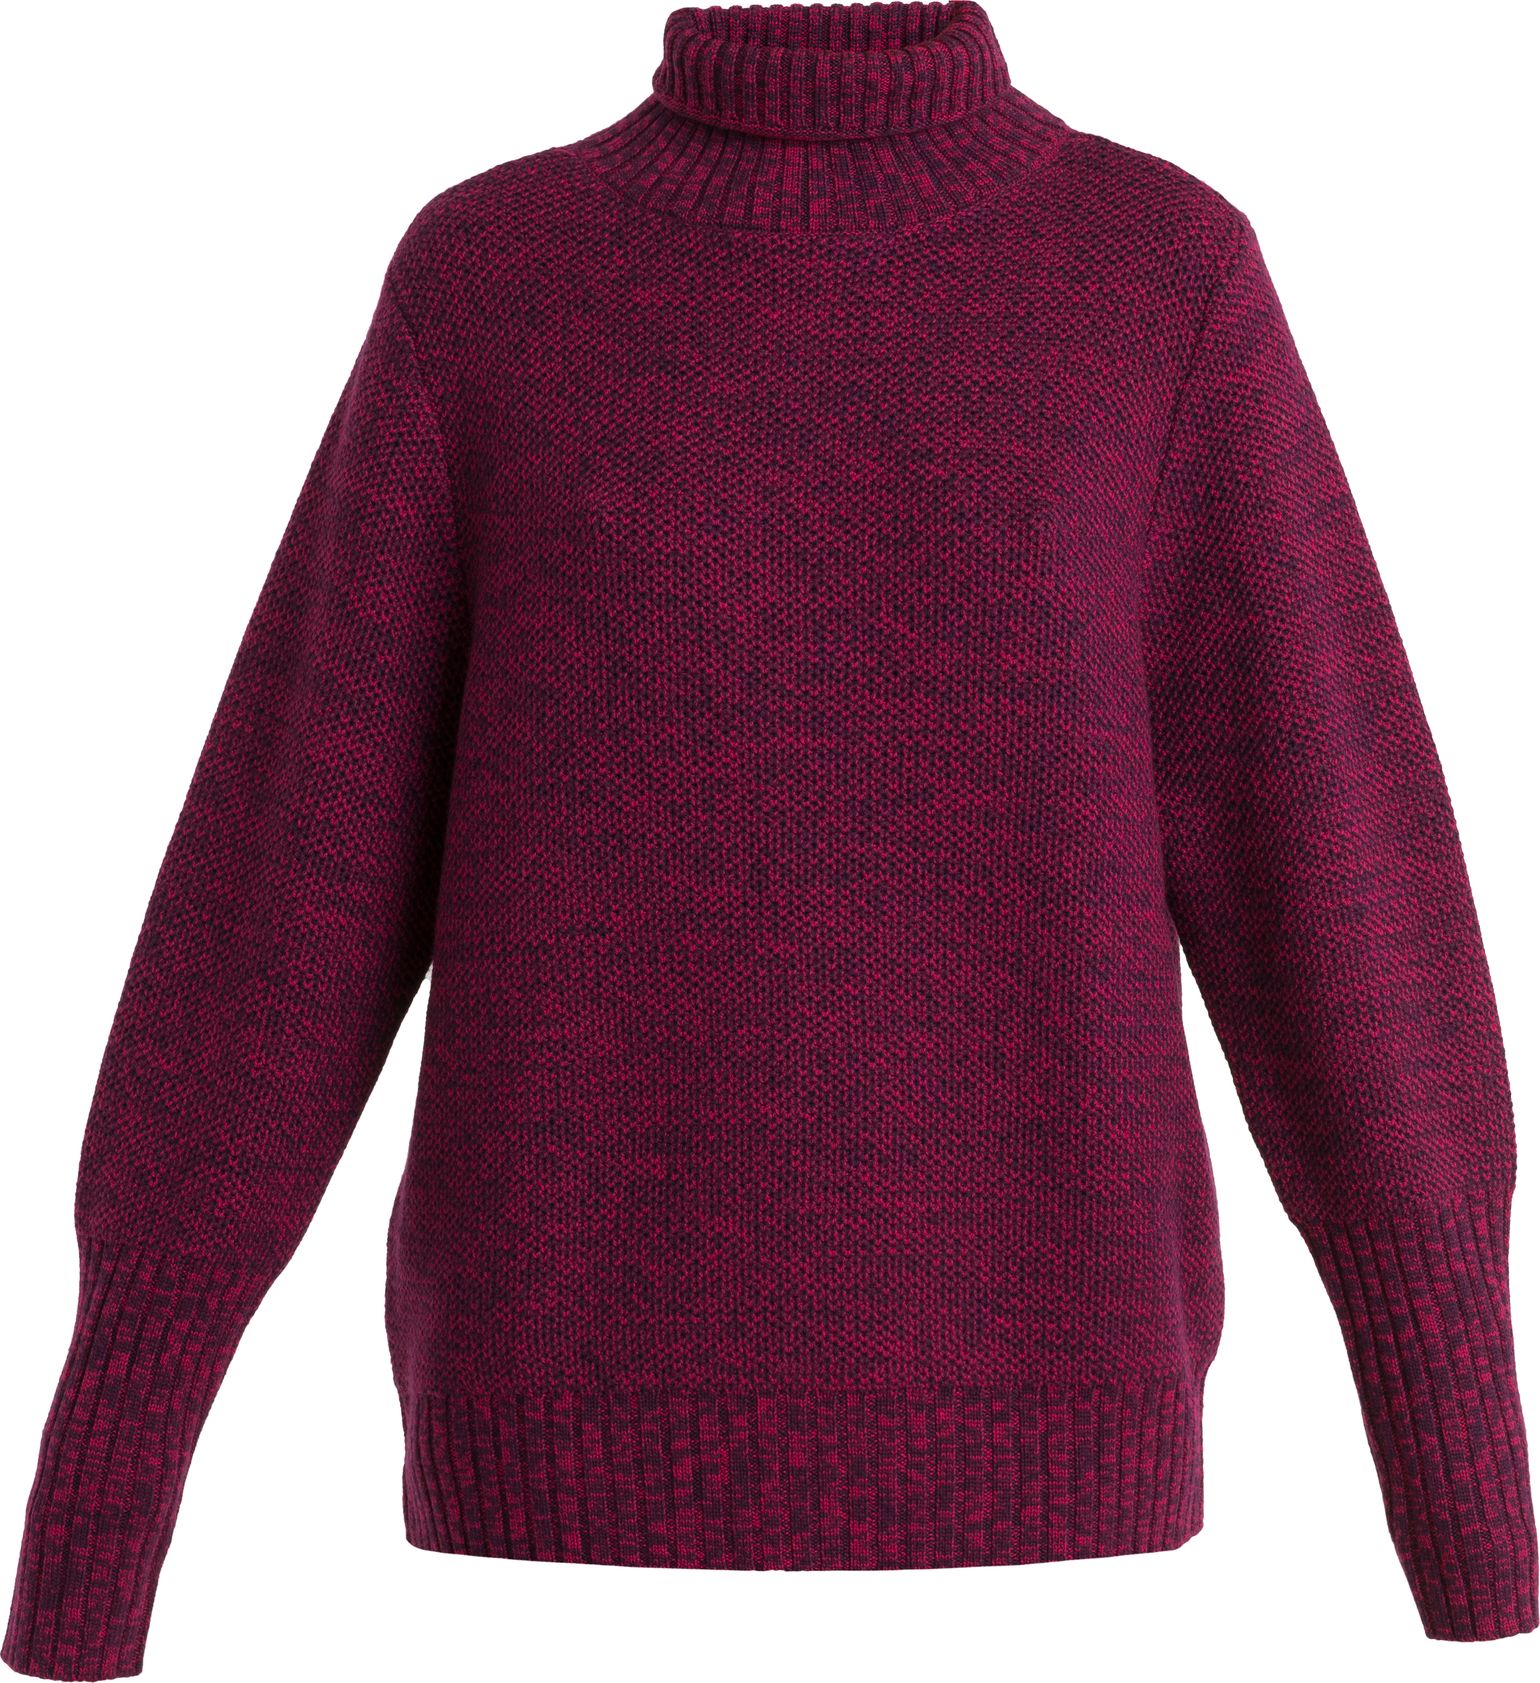 Women's Seevista Funnel Neck Sweater Nightshade/Electron Pink